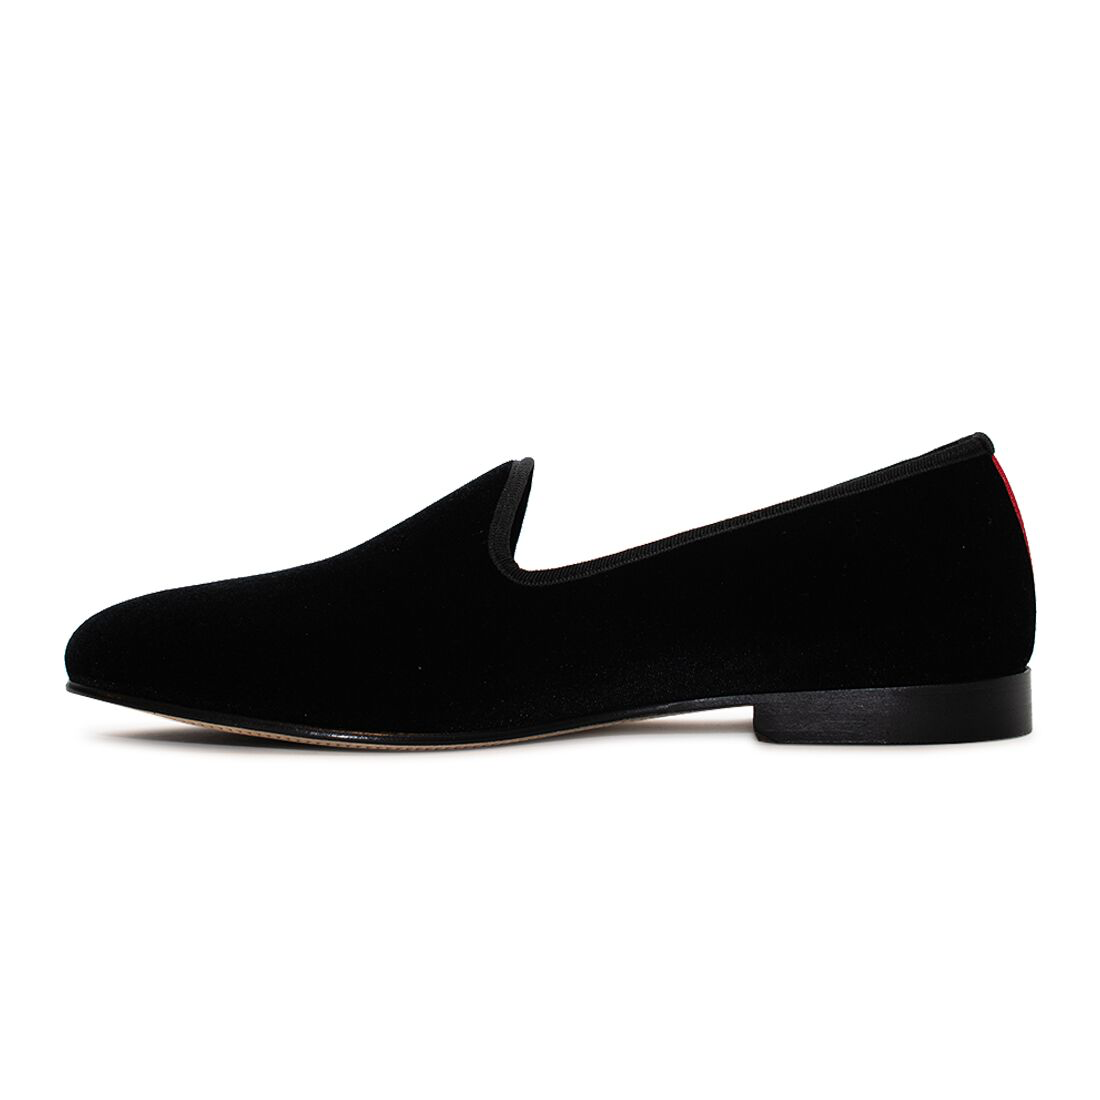 Men's Black Velvet Slipper II With Red Croc Effect Leather Stripe by Del Toro Shoes